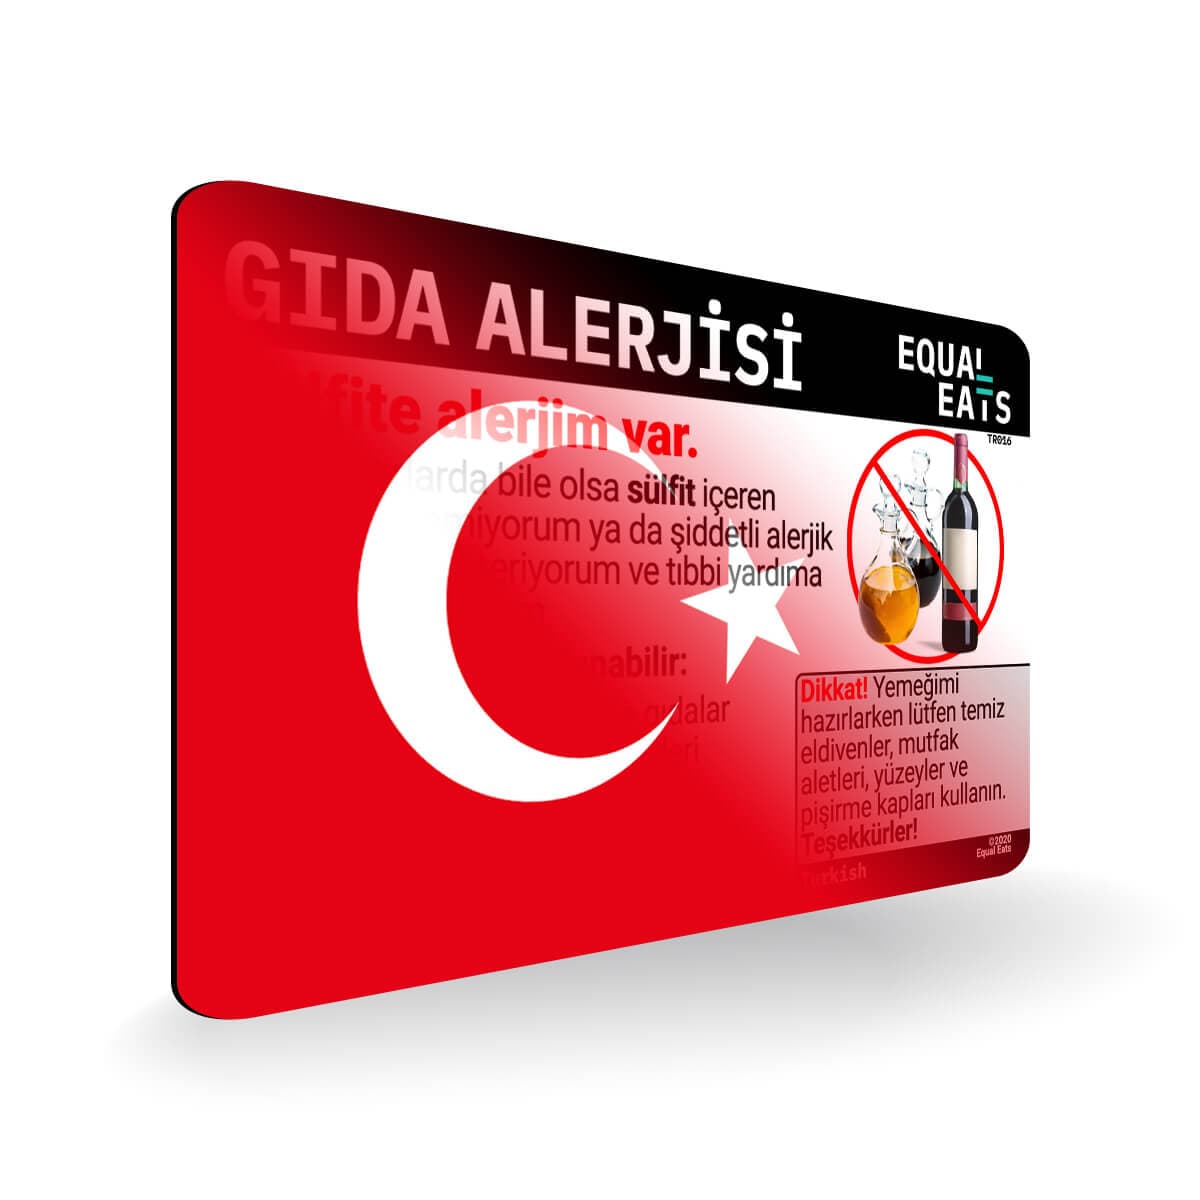 Sulfite Allergy in Turkish. Sulfite Allergy Card for Turkey